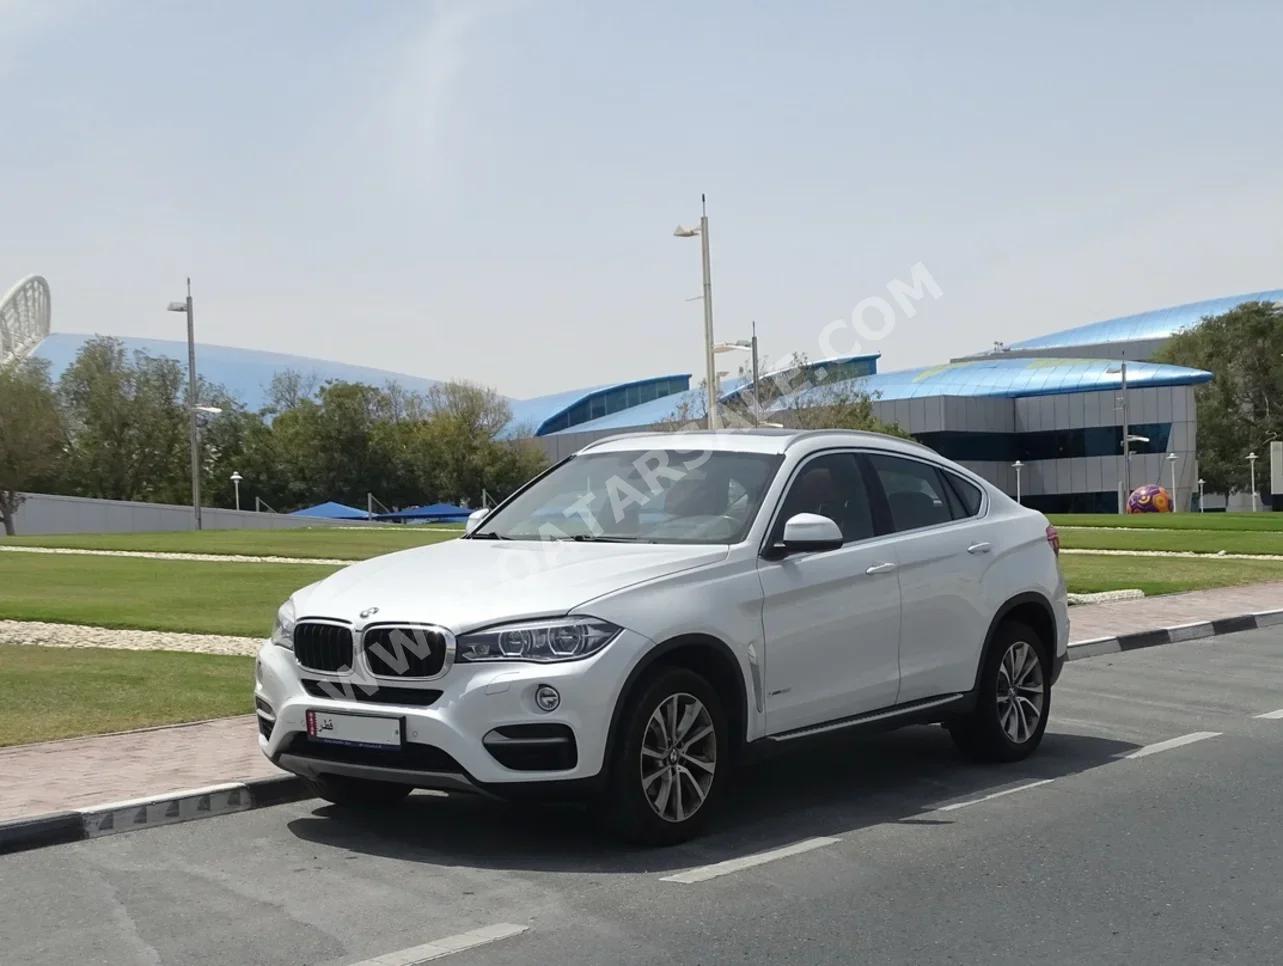 BMW  X-Series  X6  2019  Automatic  135,000 Km  6 Cylinder  Four Wheel Drive (4WD)  SUV  White